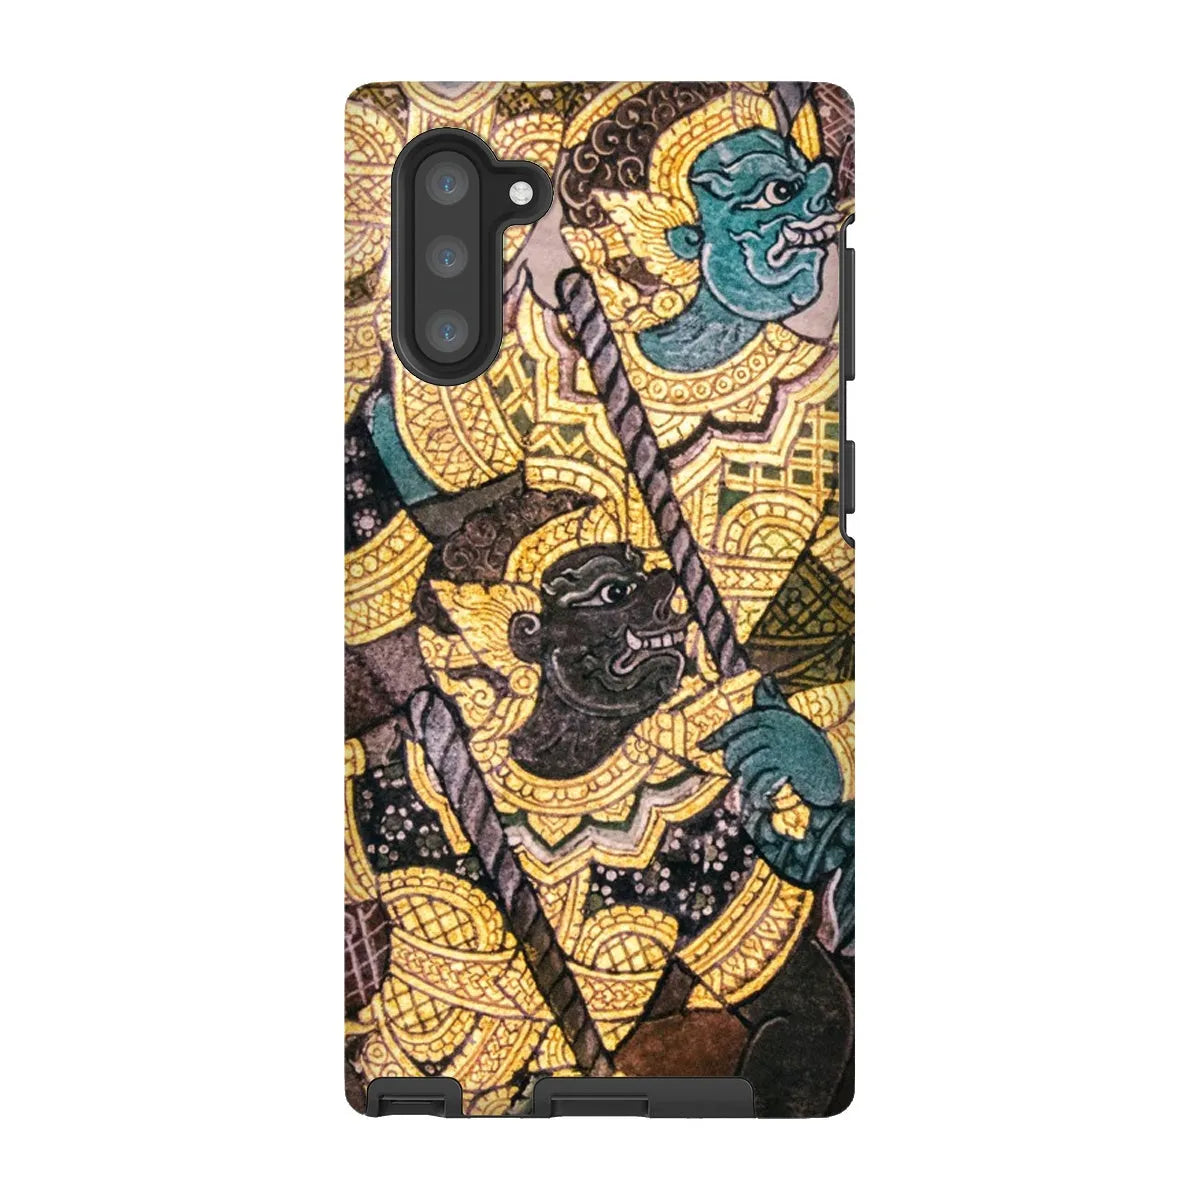 Action Men - Thai Aesthetic Art Phone Case - Samsung Galaxy Note 10 / Matte - Mobile Phone Cases - Aesthetic Art